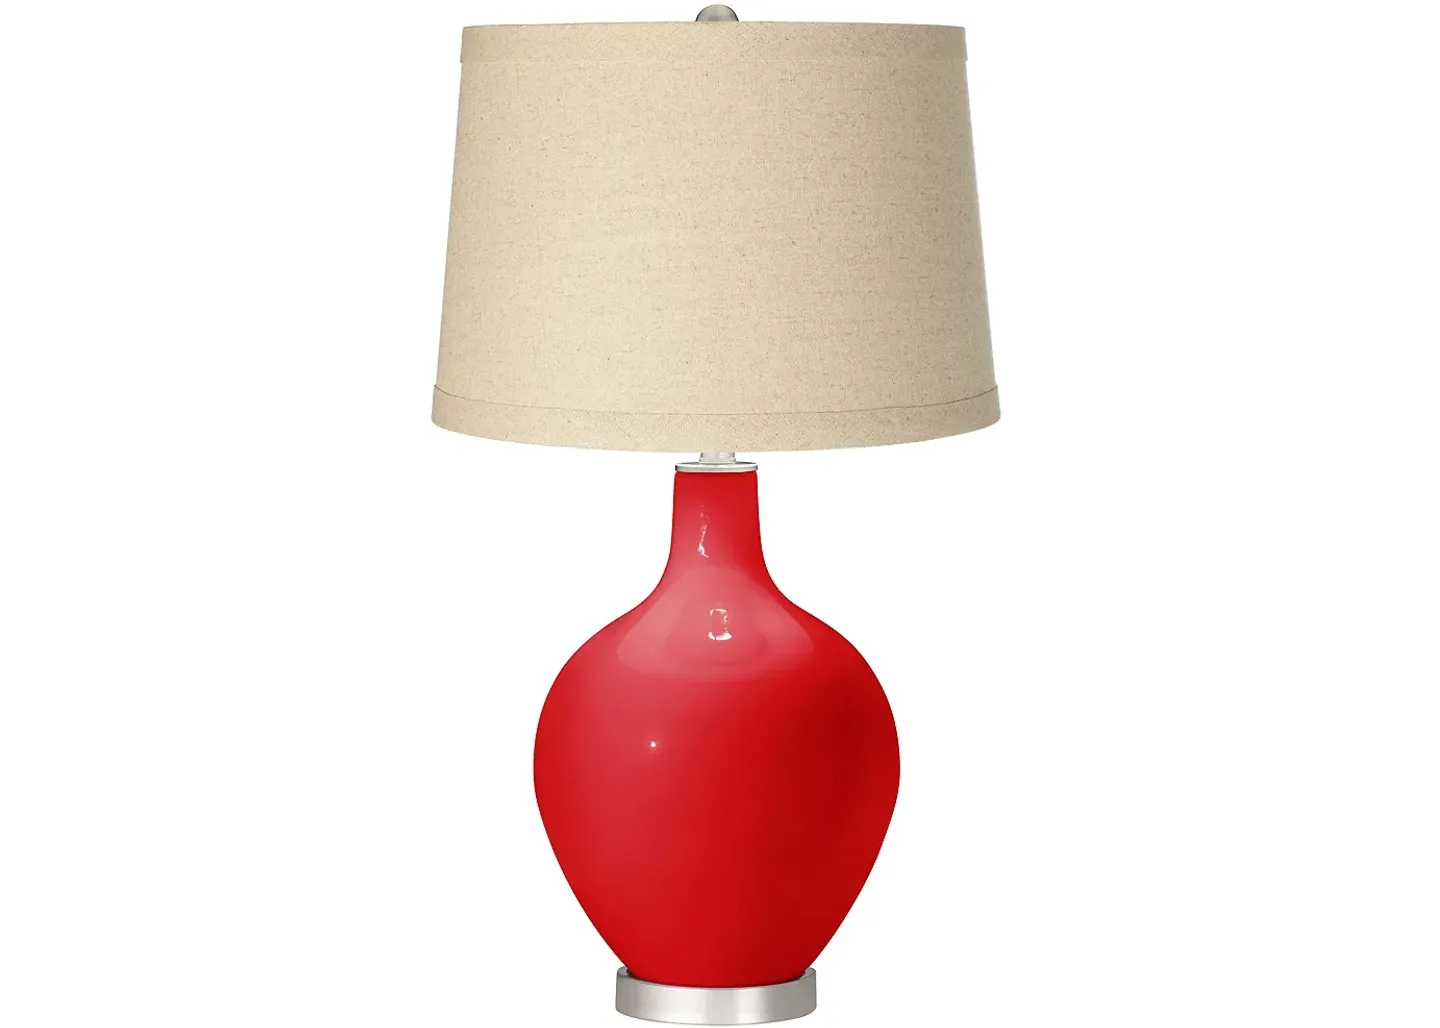 Color Plus Bright Red Burlap Drum Shade Ovo Table Lamp